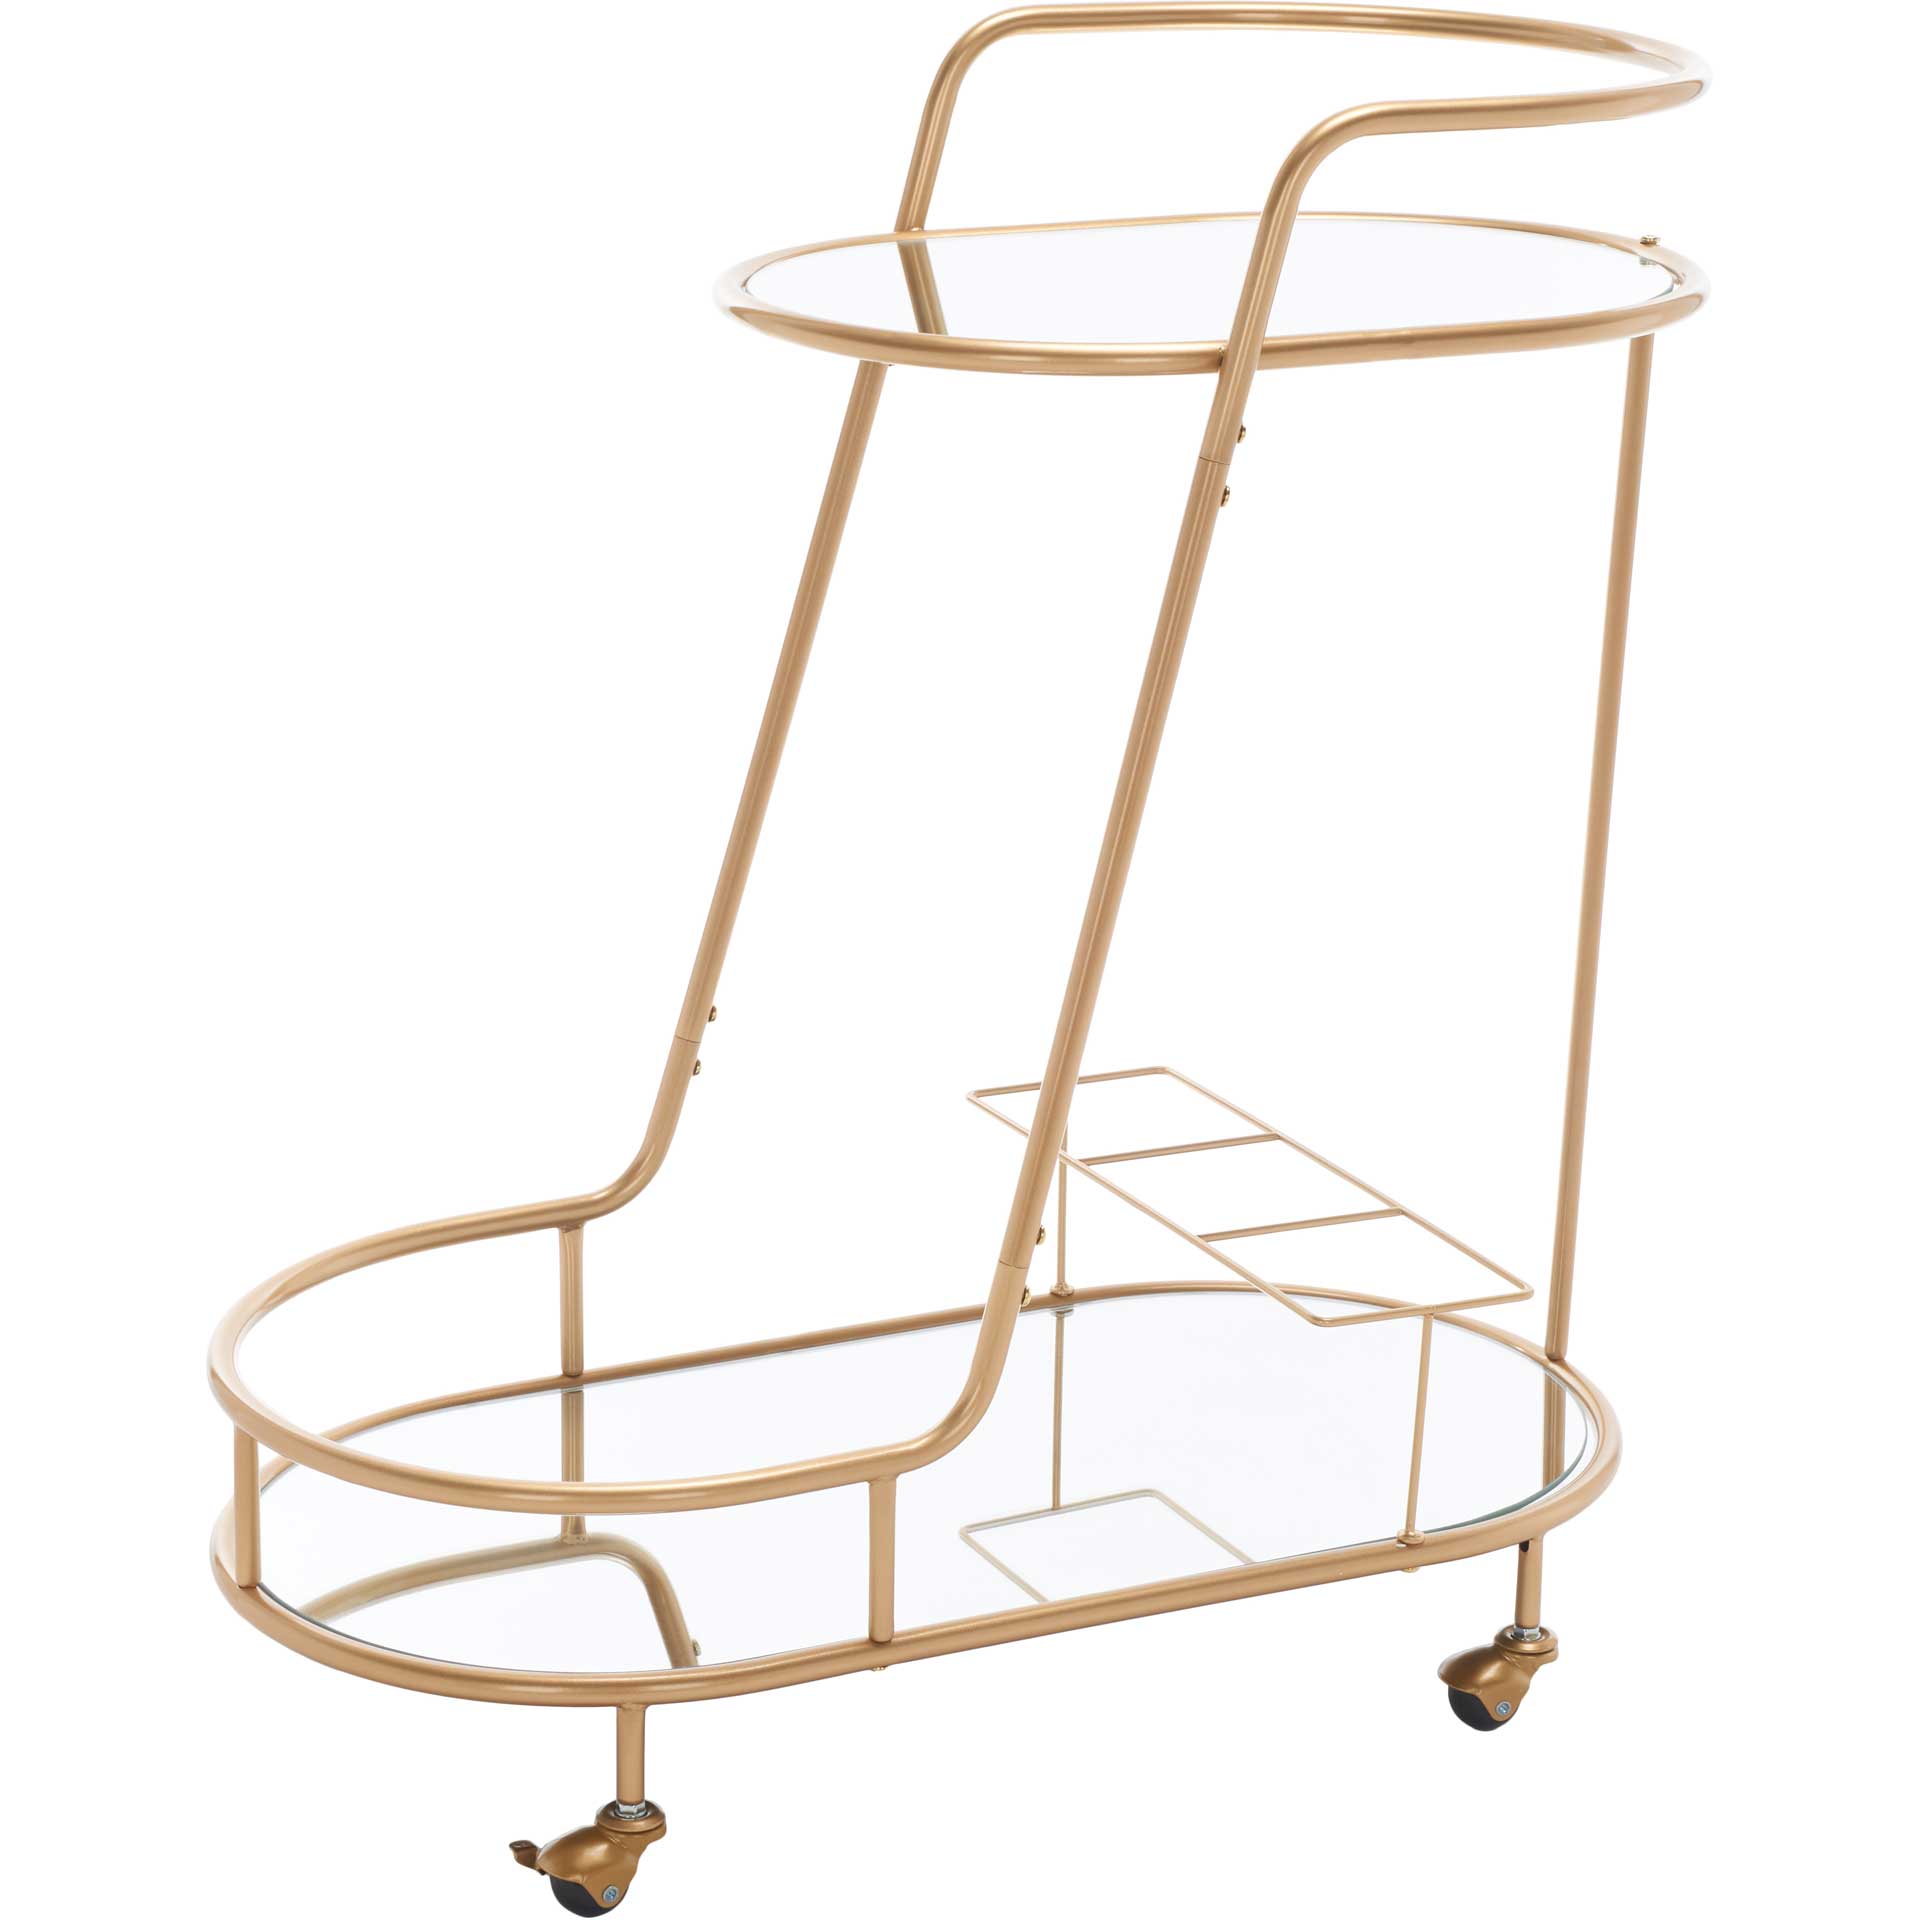 Midon 2 Tier Oval Bar Cart Gold/Mirrored